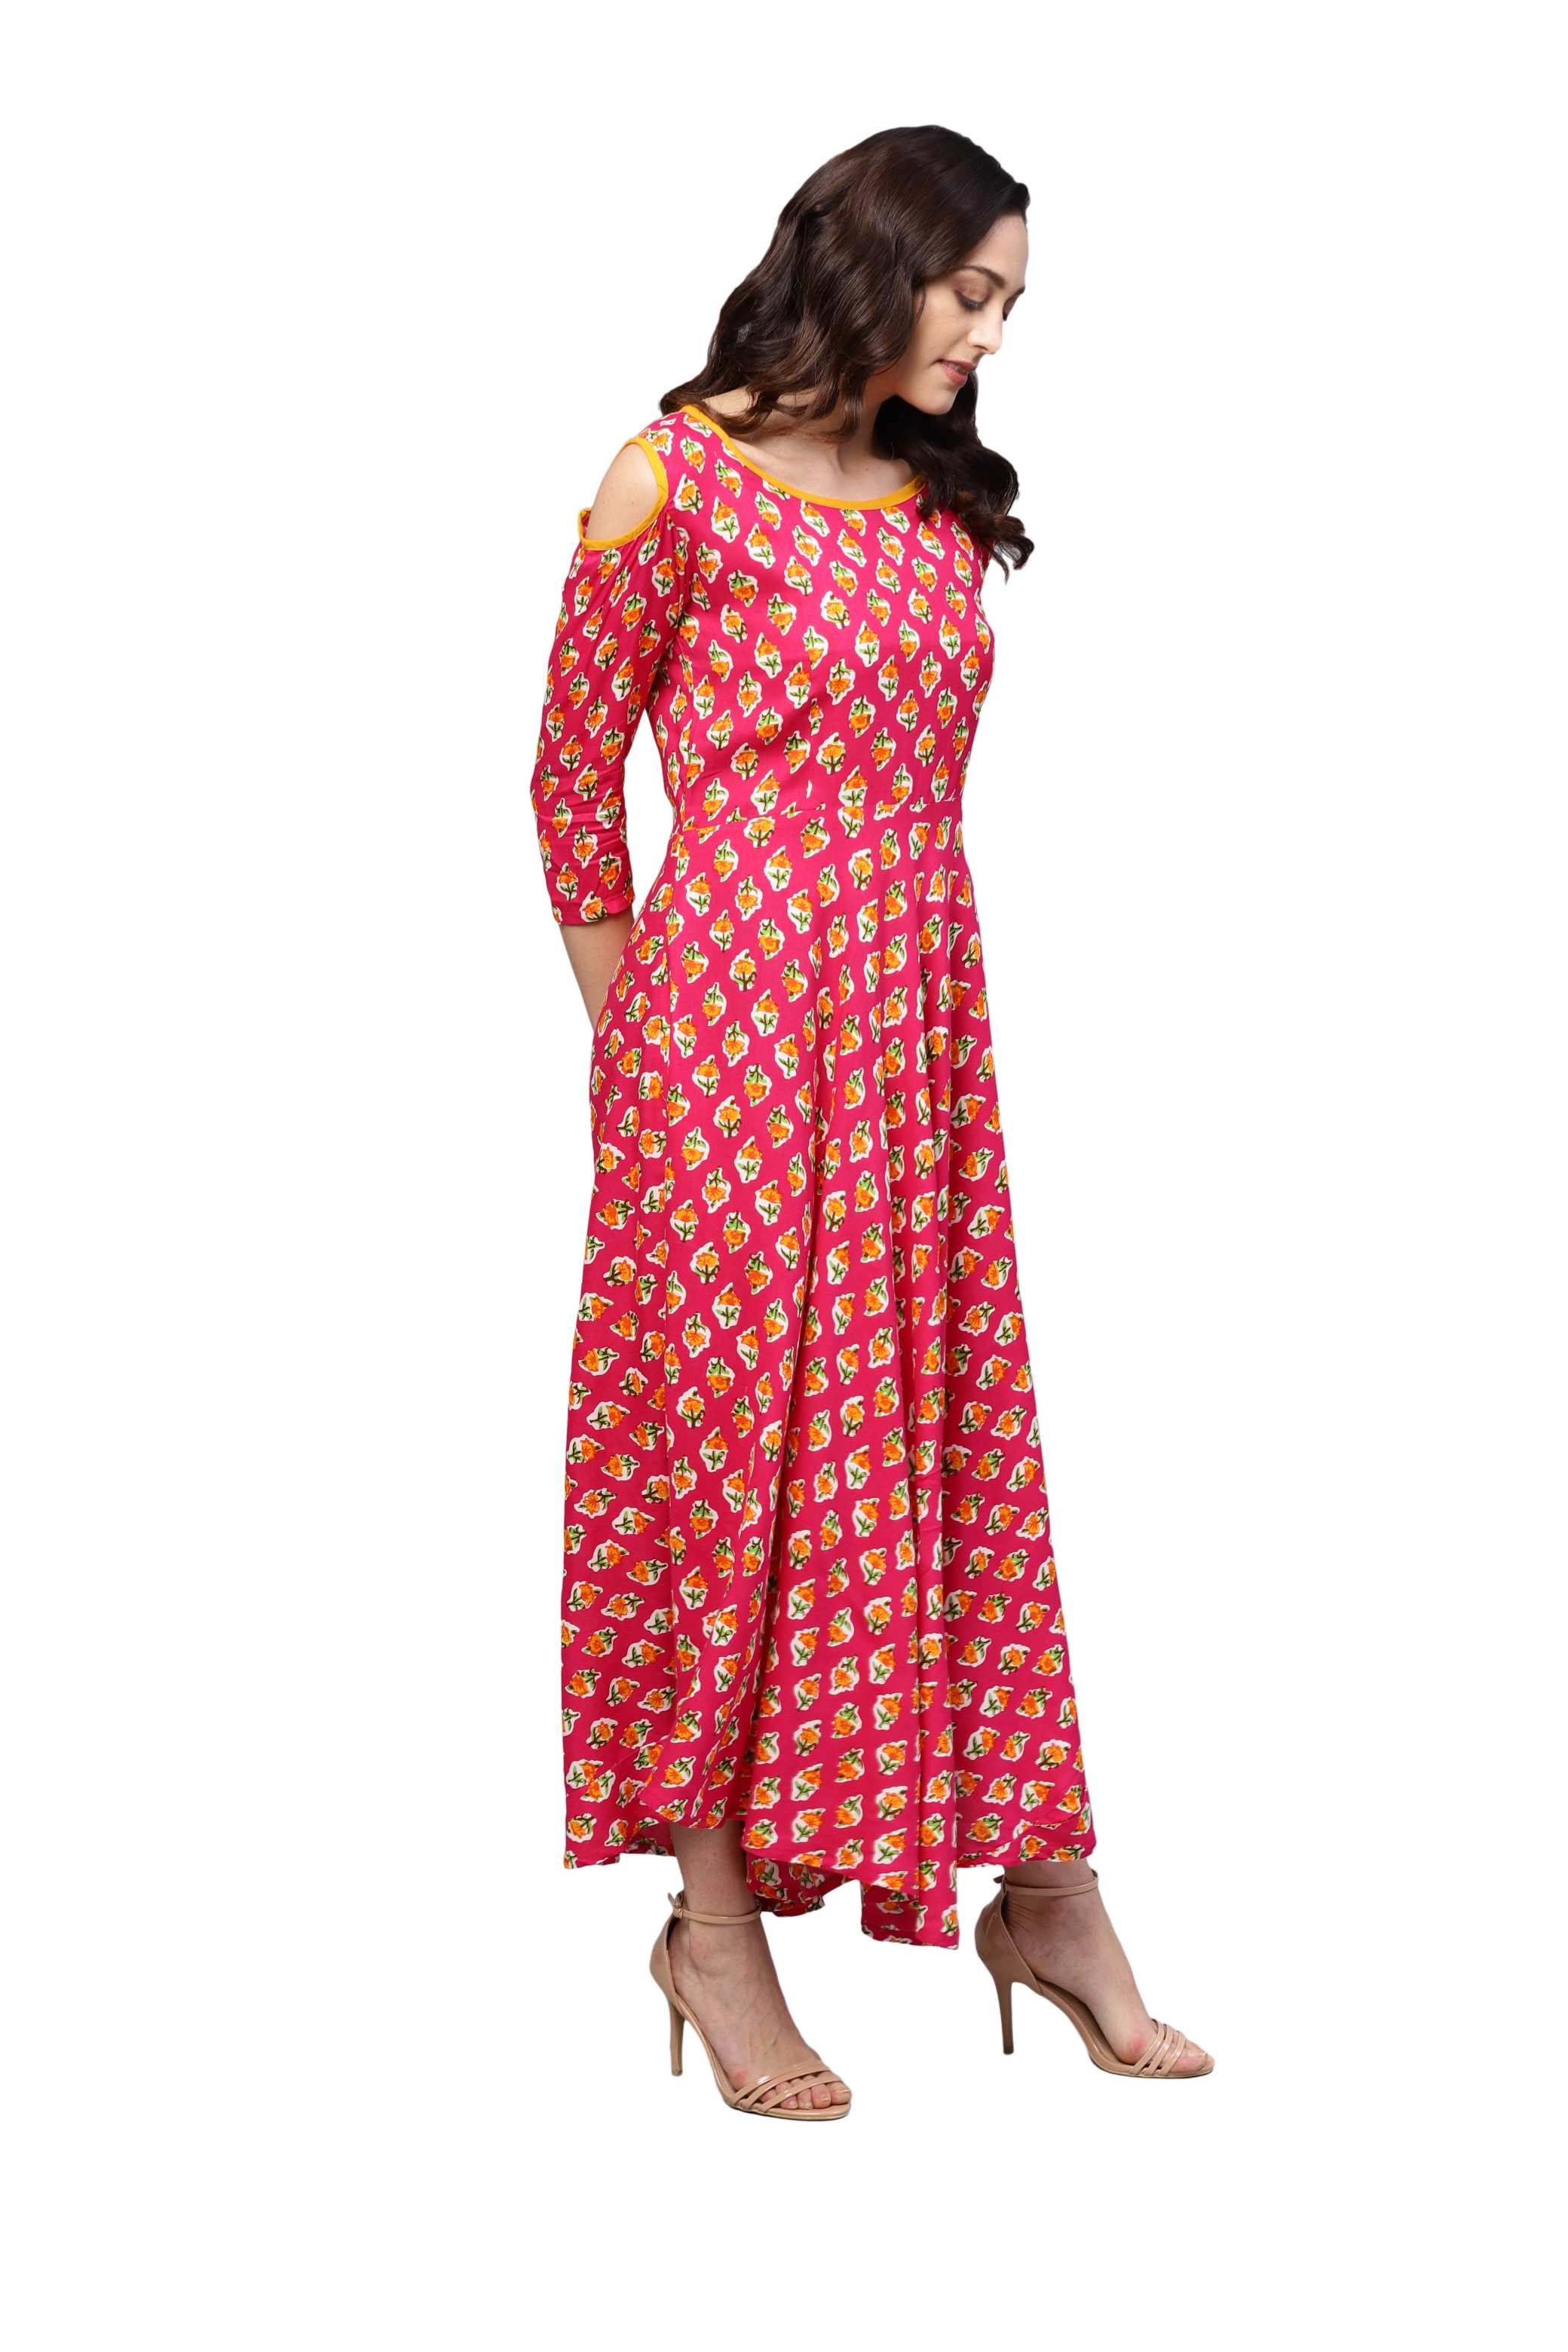 Women's Red Rayon Printed 3/4 Sleeve Round Neck Dress - Myshka